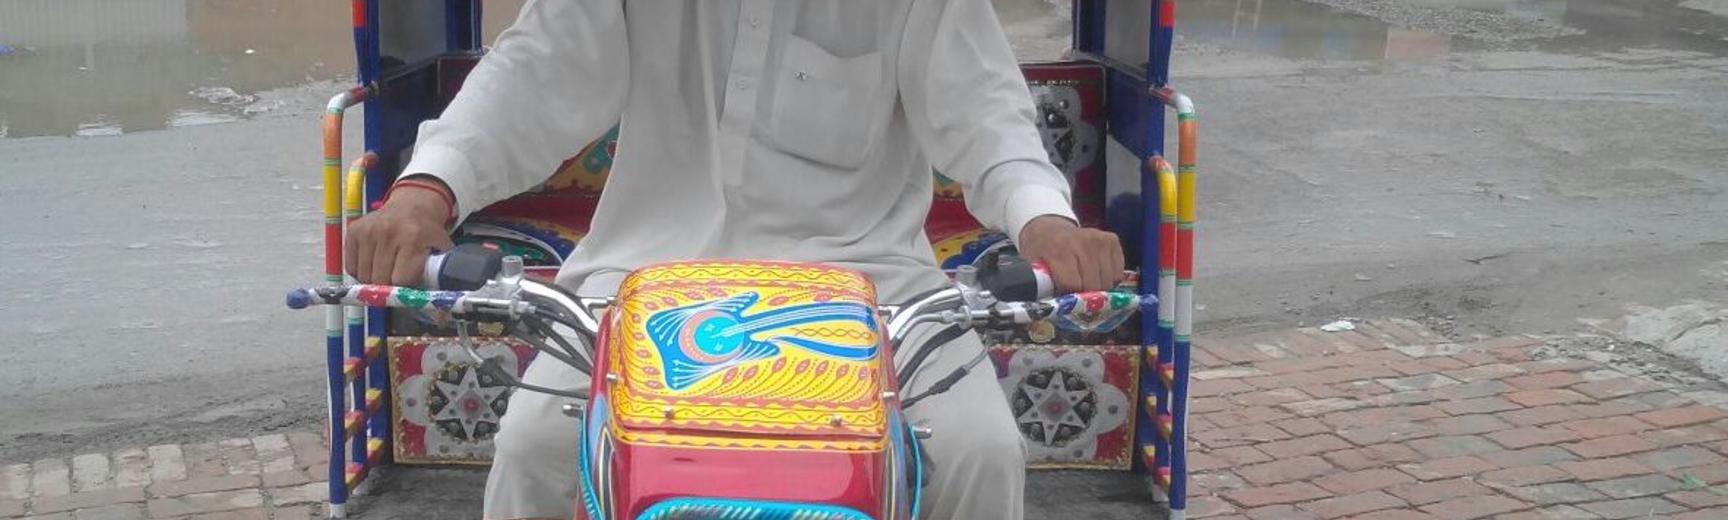 Man in Rickshaw in Lahore